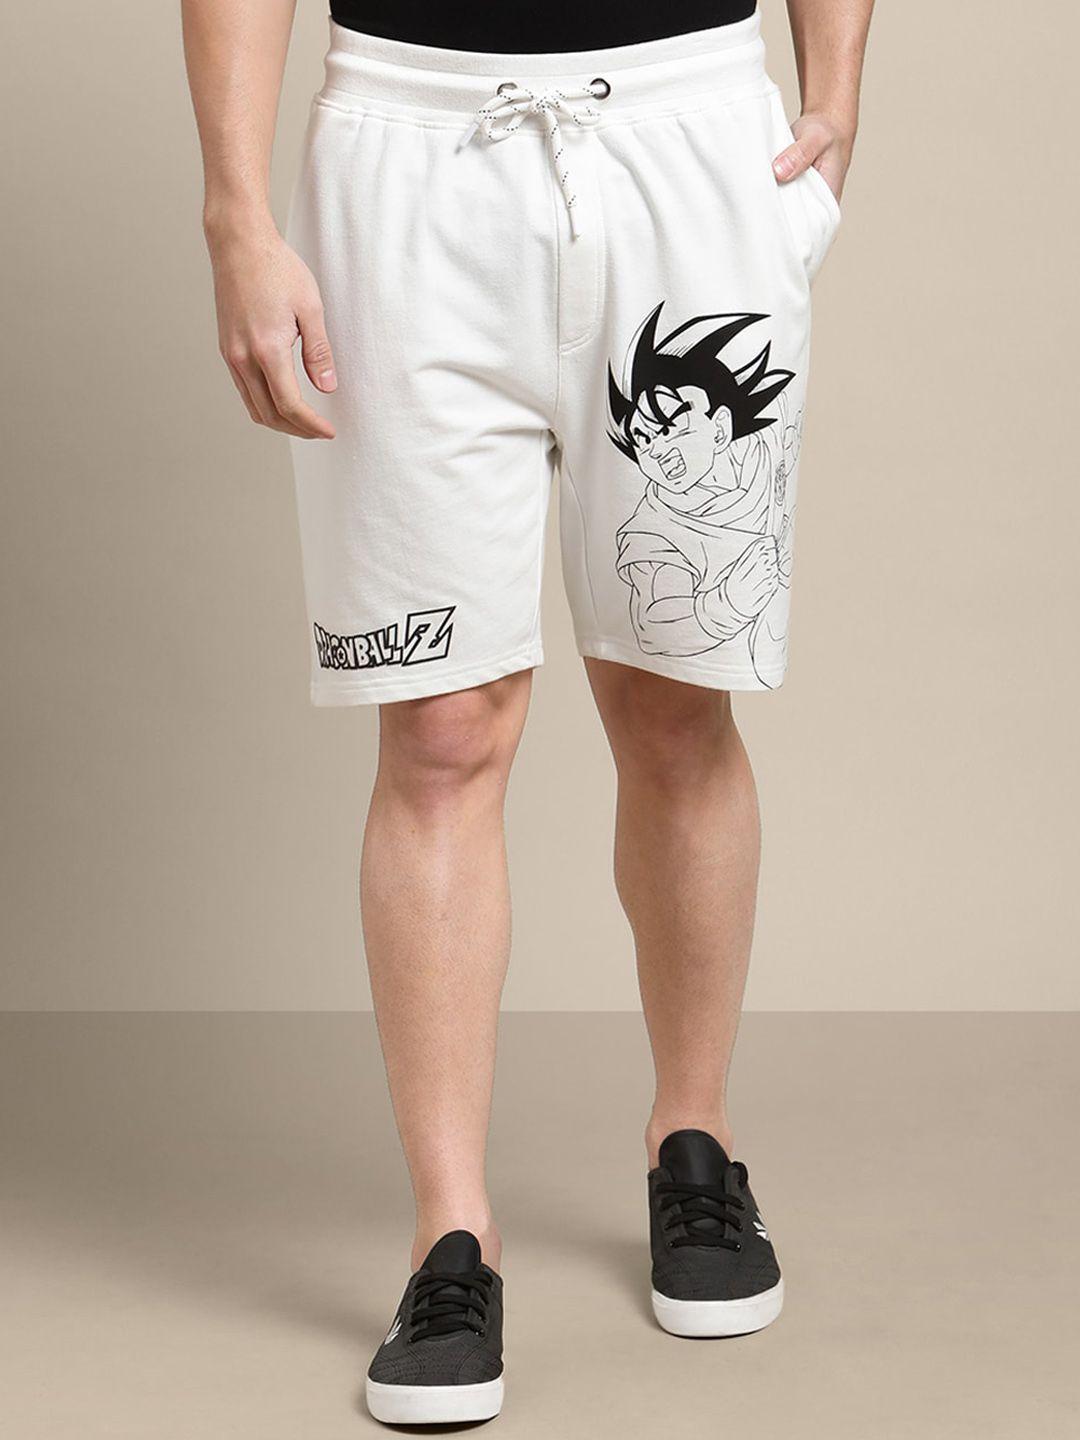 Free Authority Men Dragon Ball Z Printed Cotton Shorts